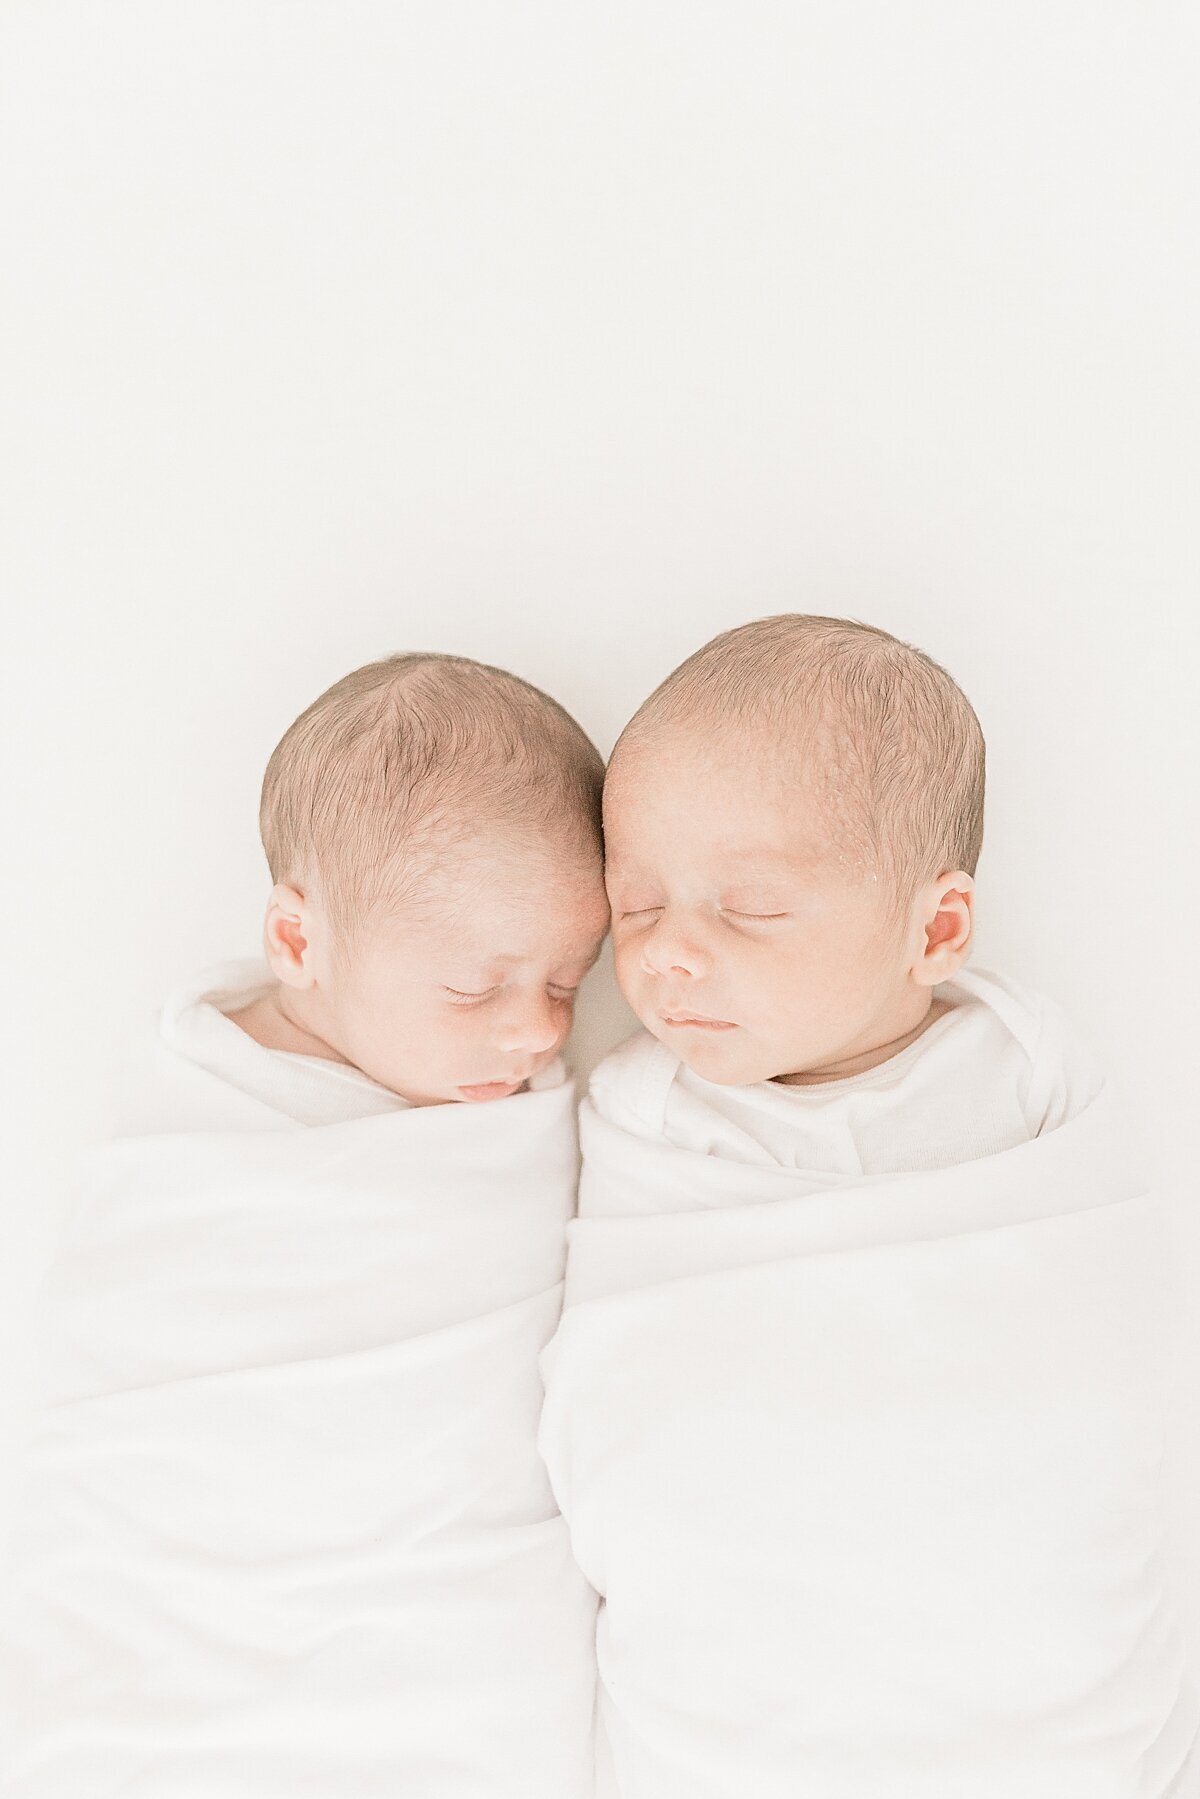 charleston-baby-photographer-twin-newborn-session-caitlyn-motycka-photography_0024